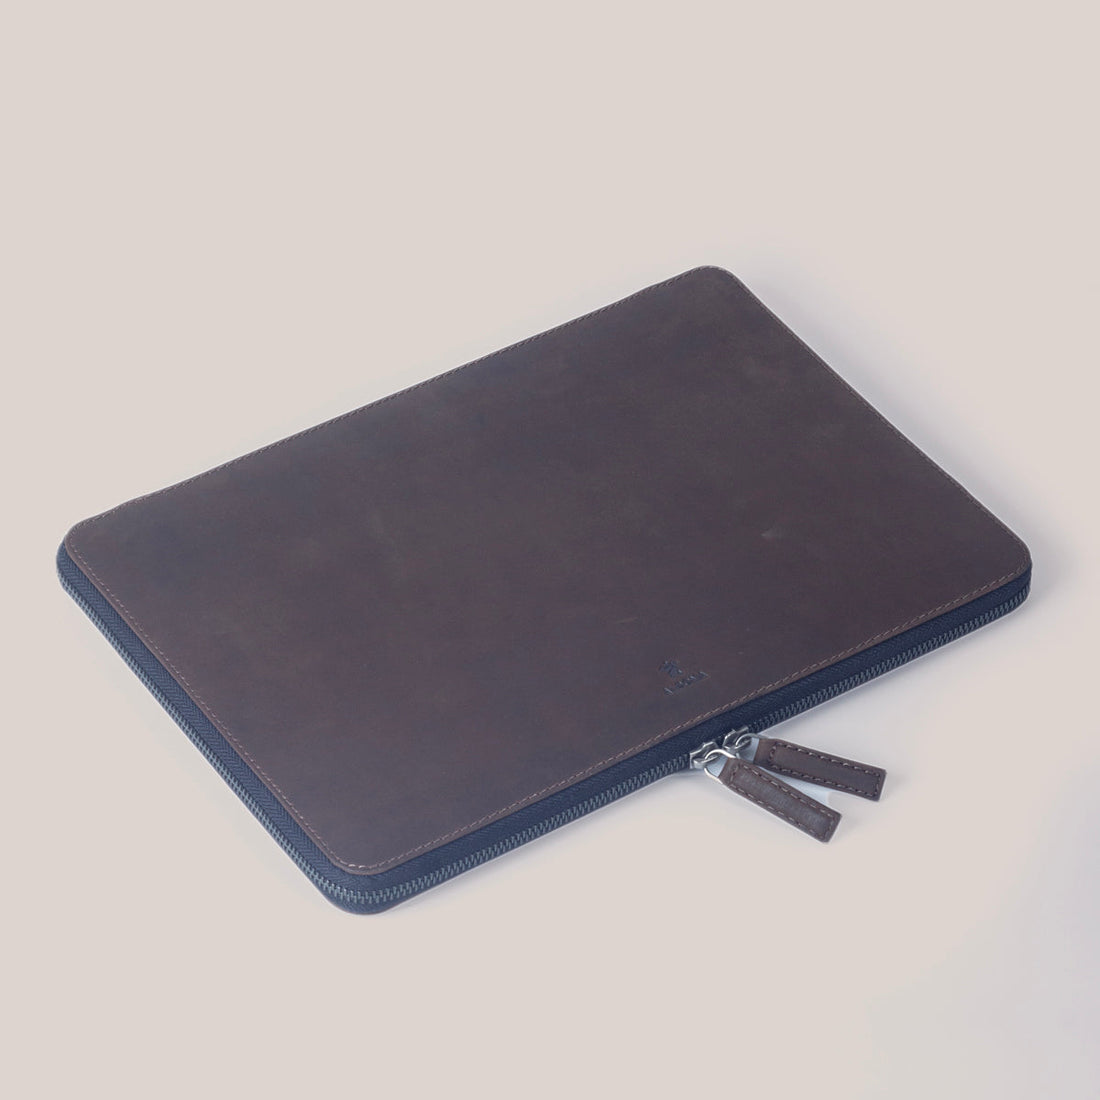 Microsoft Surface Laptop 15 Zippered Laptop Case - Onyx Black